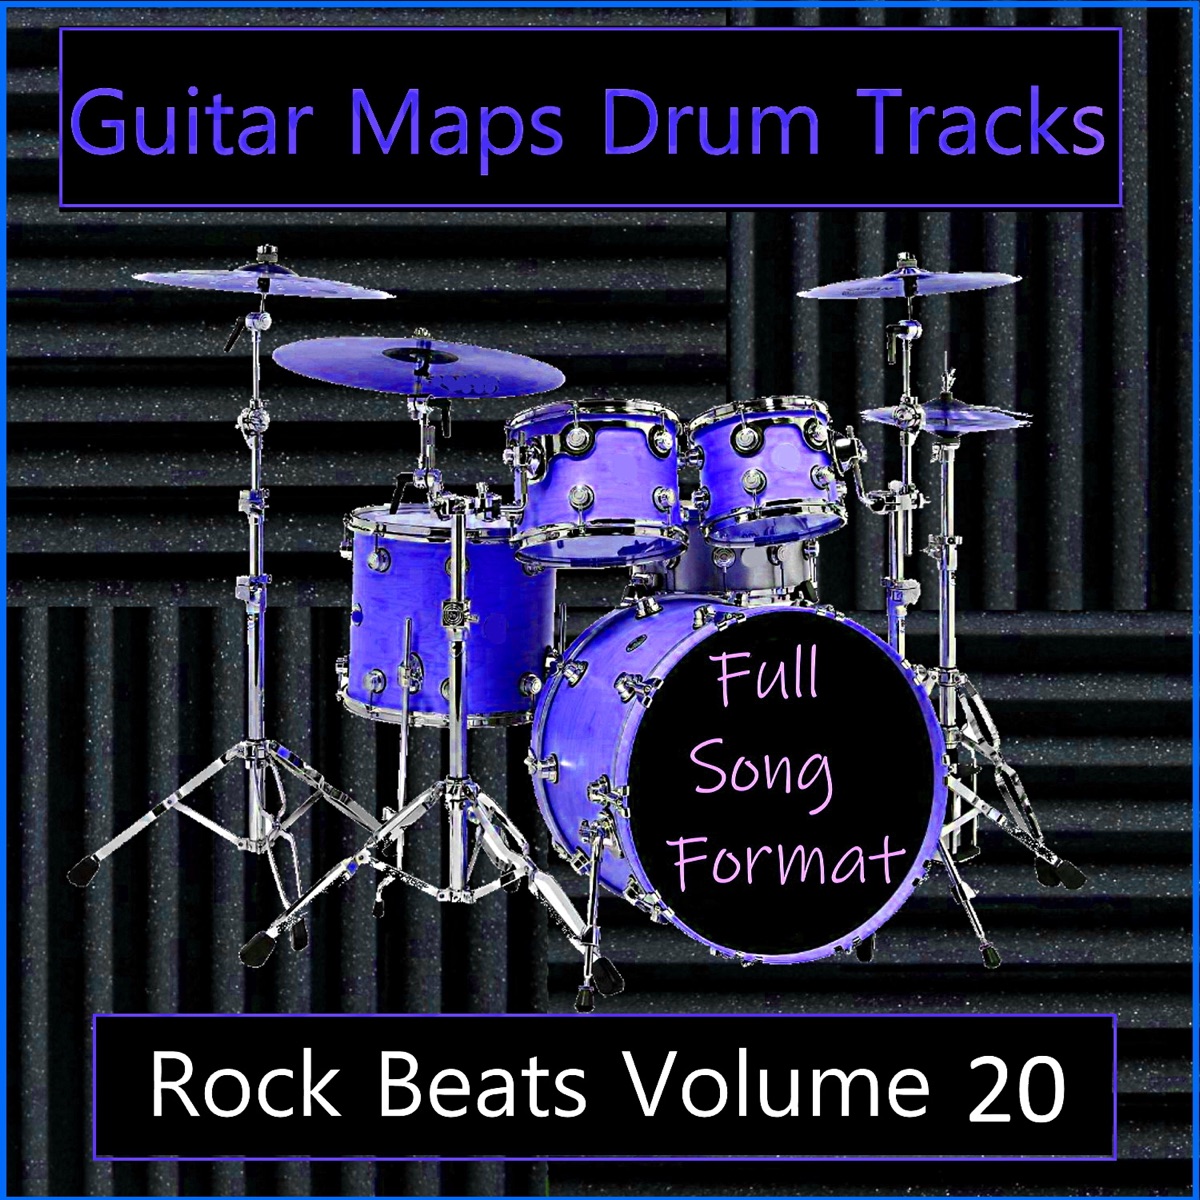 Drum Tracks Rock Beats for Bass Guitar, Vol. 20 - Album by Guitar Maps Drum  Tracks - Apple Music